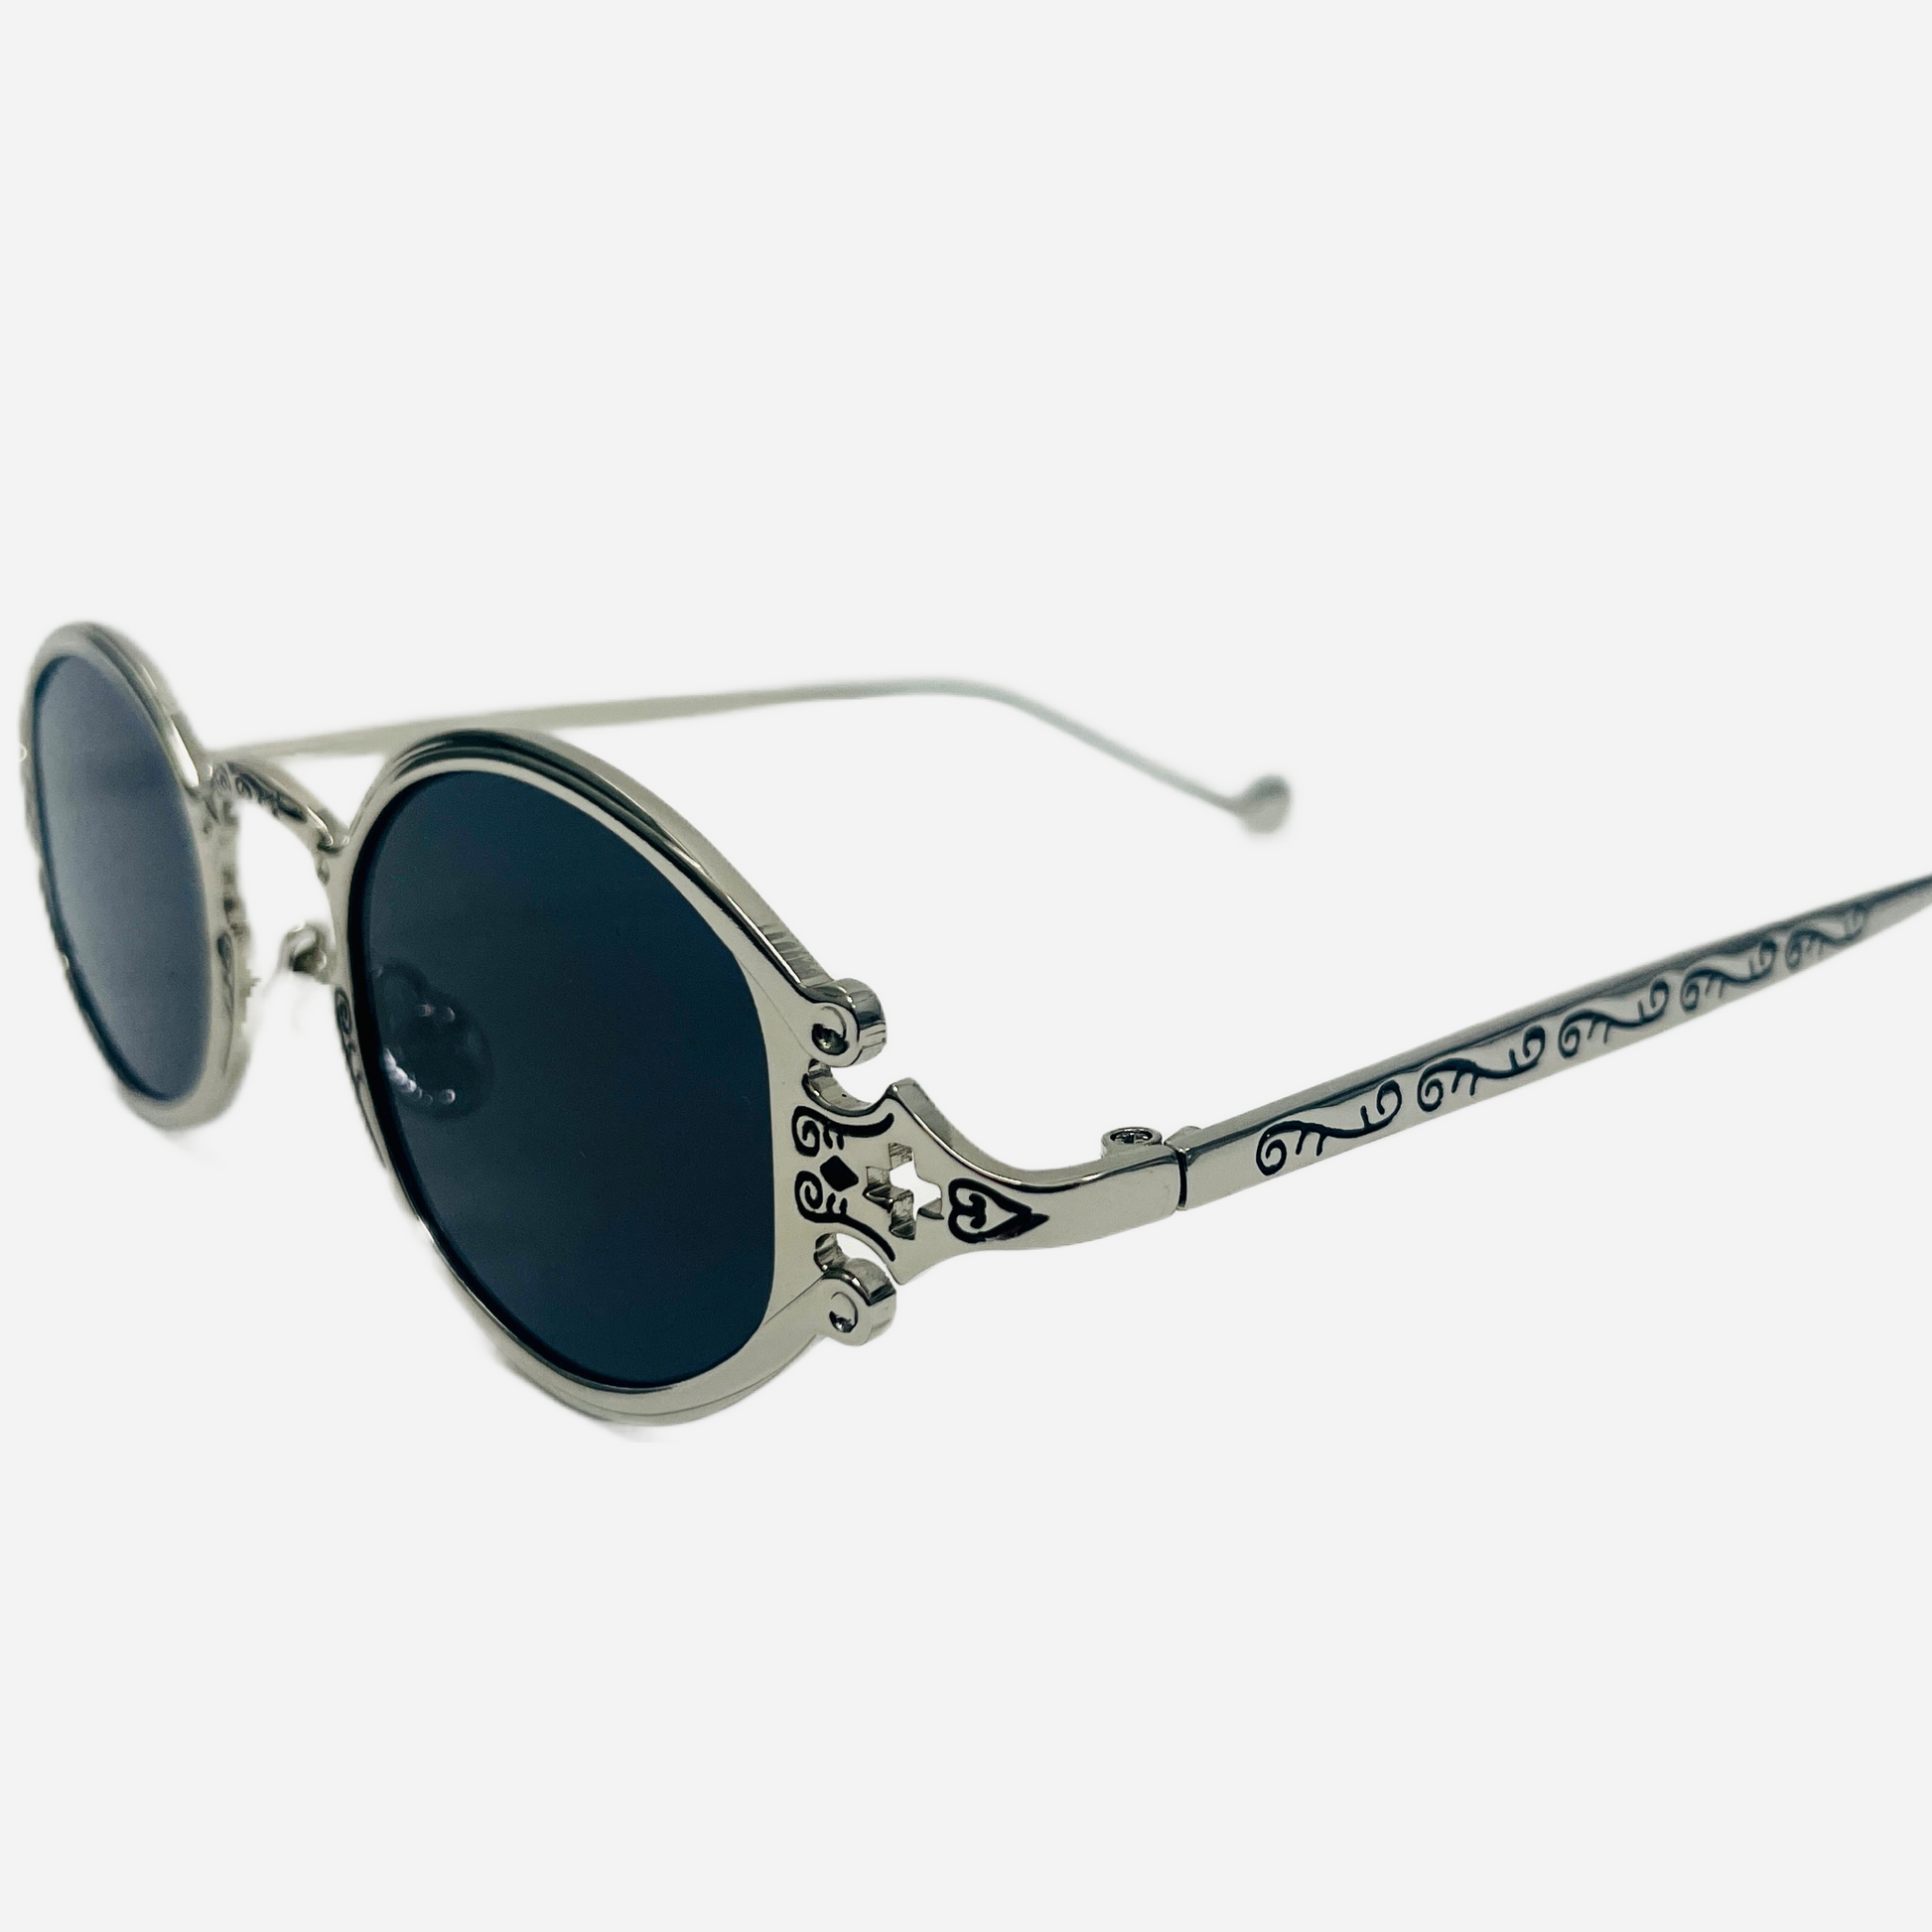 Vintage-Jean-Paul-Gaultier-Sonnenbrille-Sunglasses-Model-56-0001-silver-side